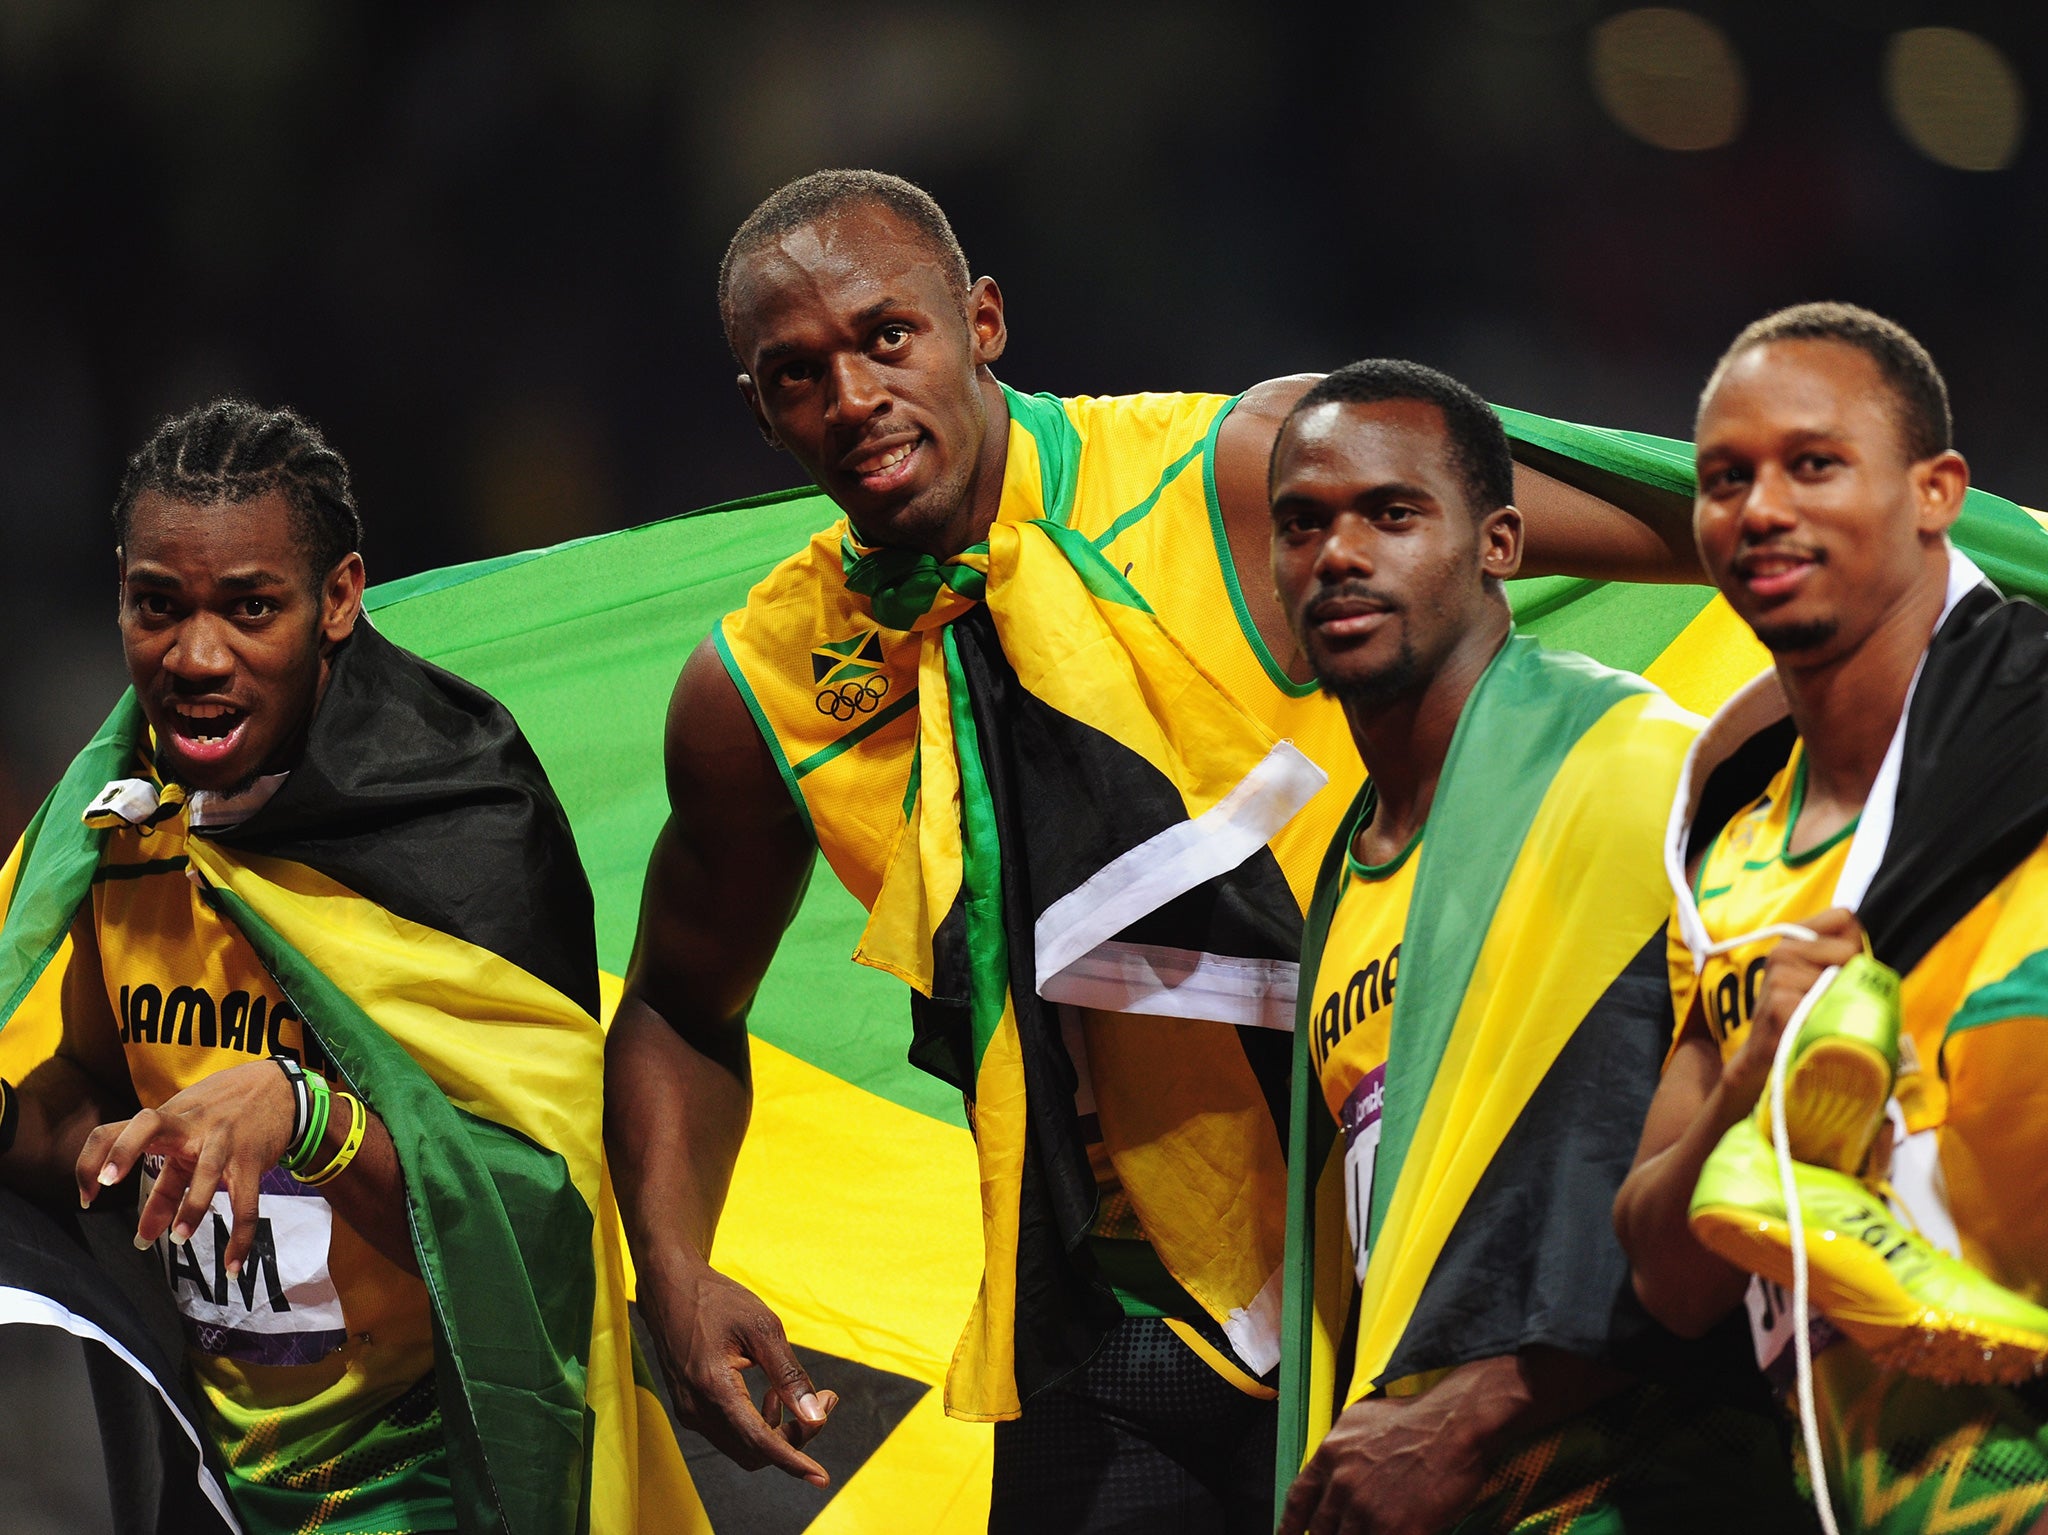 Jamaica's men's relay team celebrates victory at London 2012